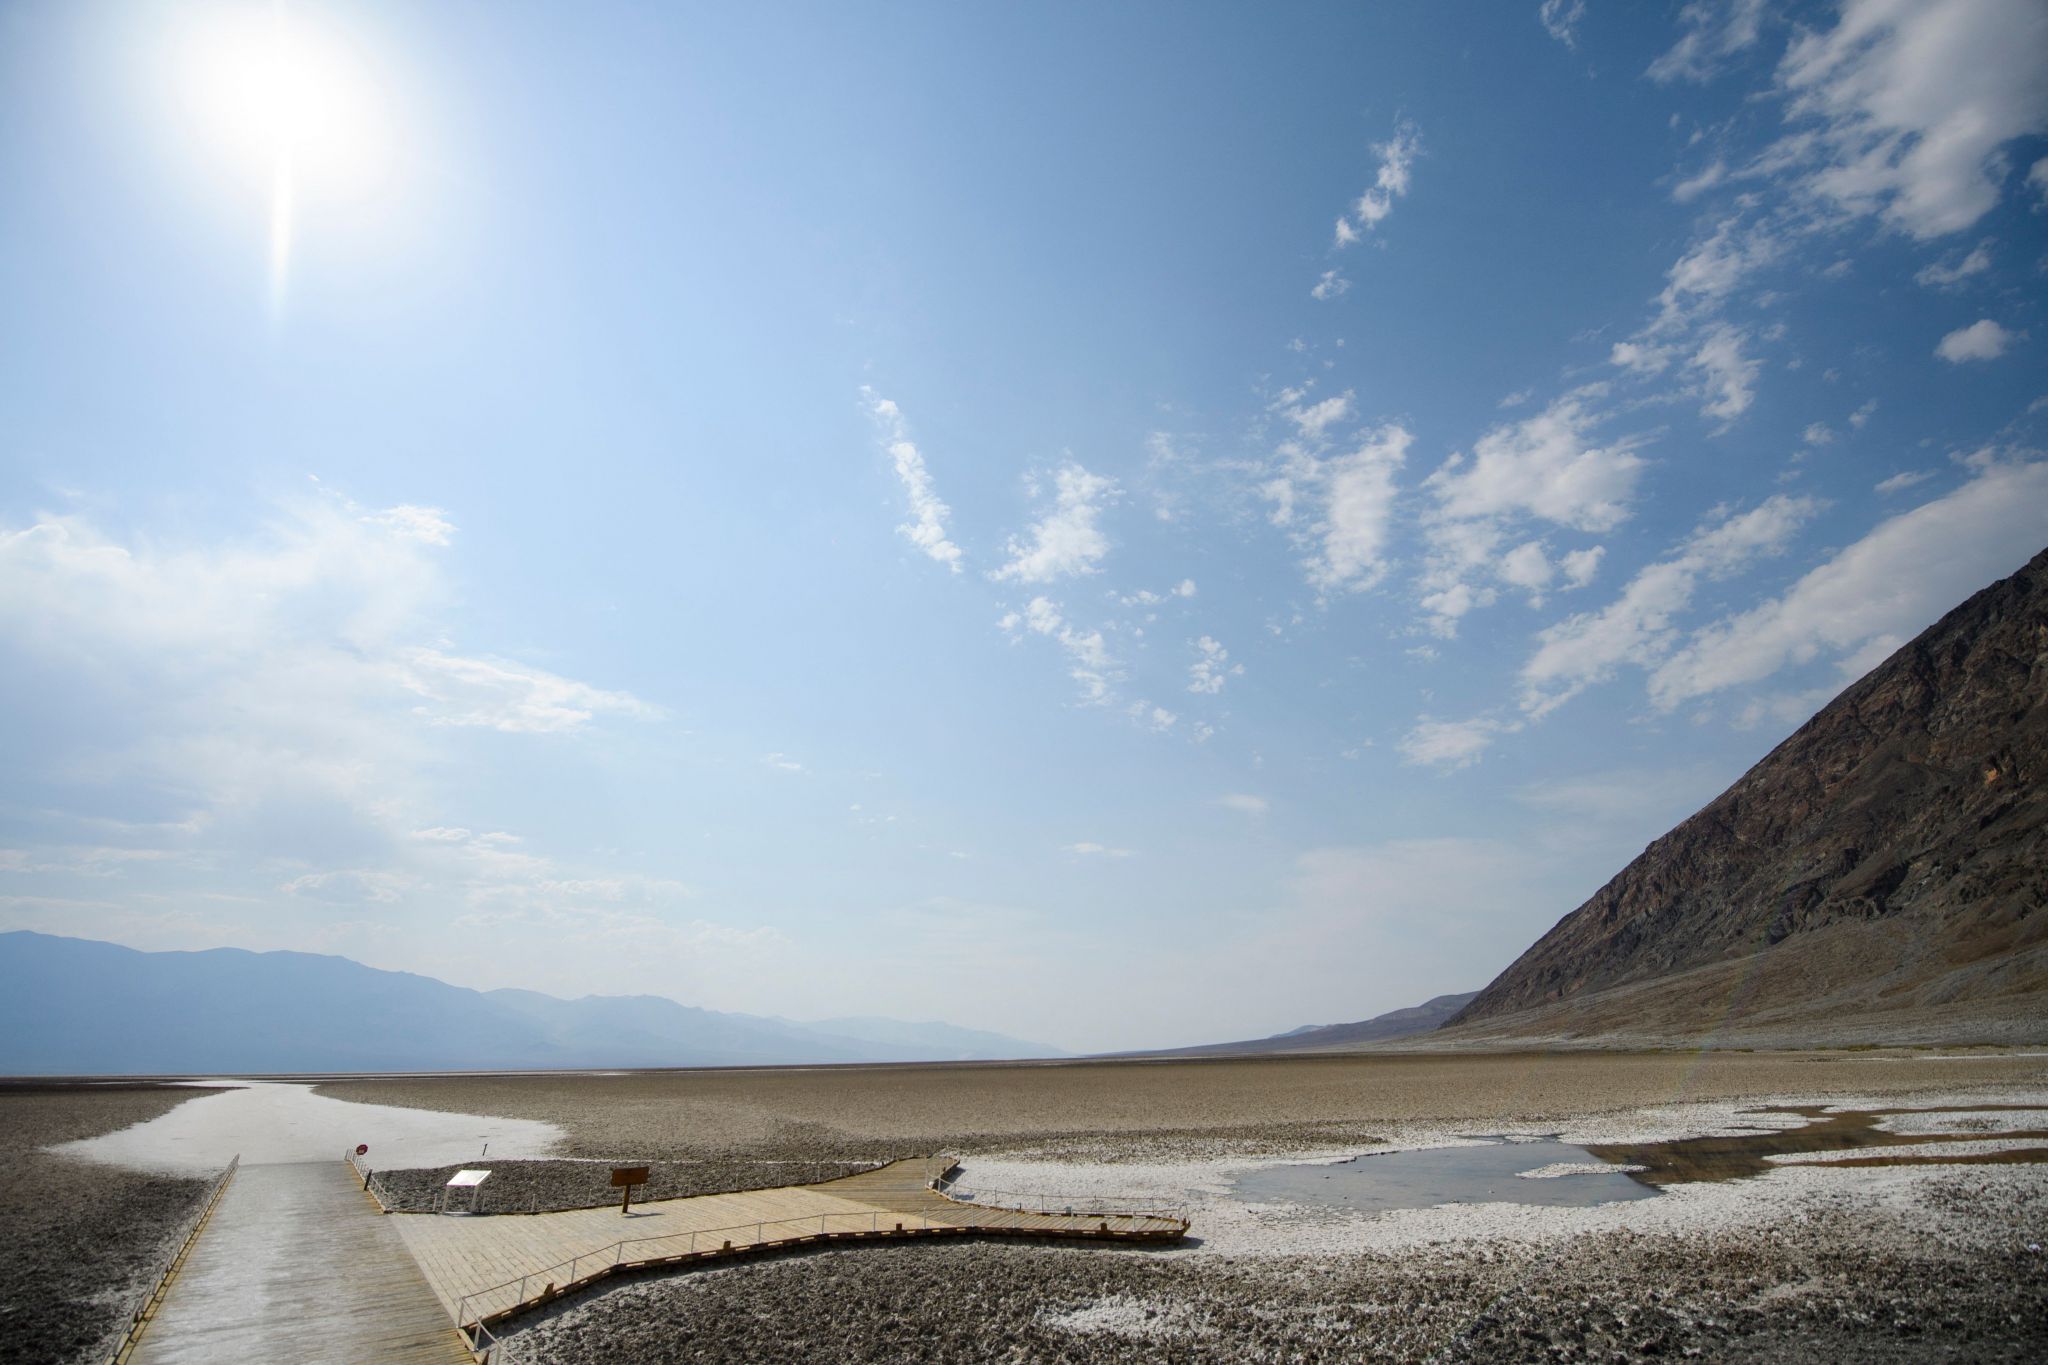 Man dies hiking in Death Valley amid 118 degree heat - SF Gate